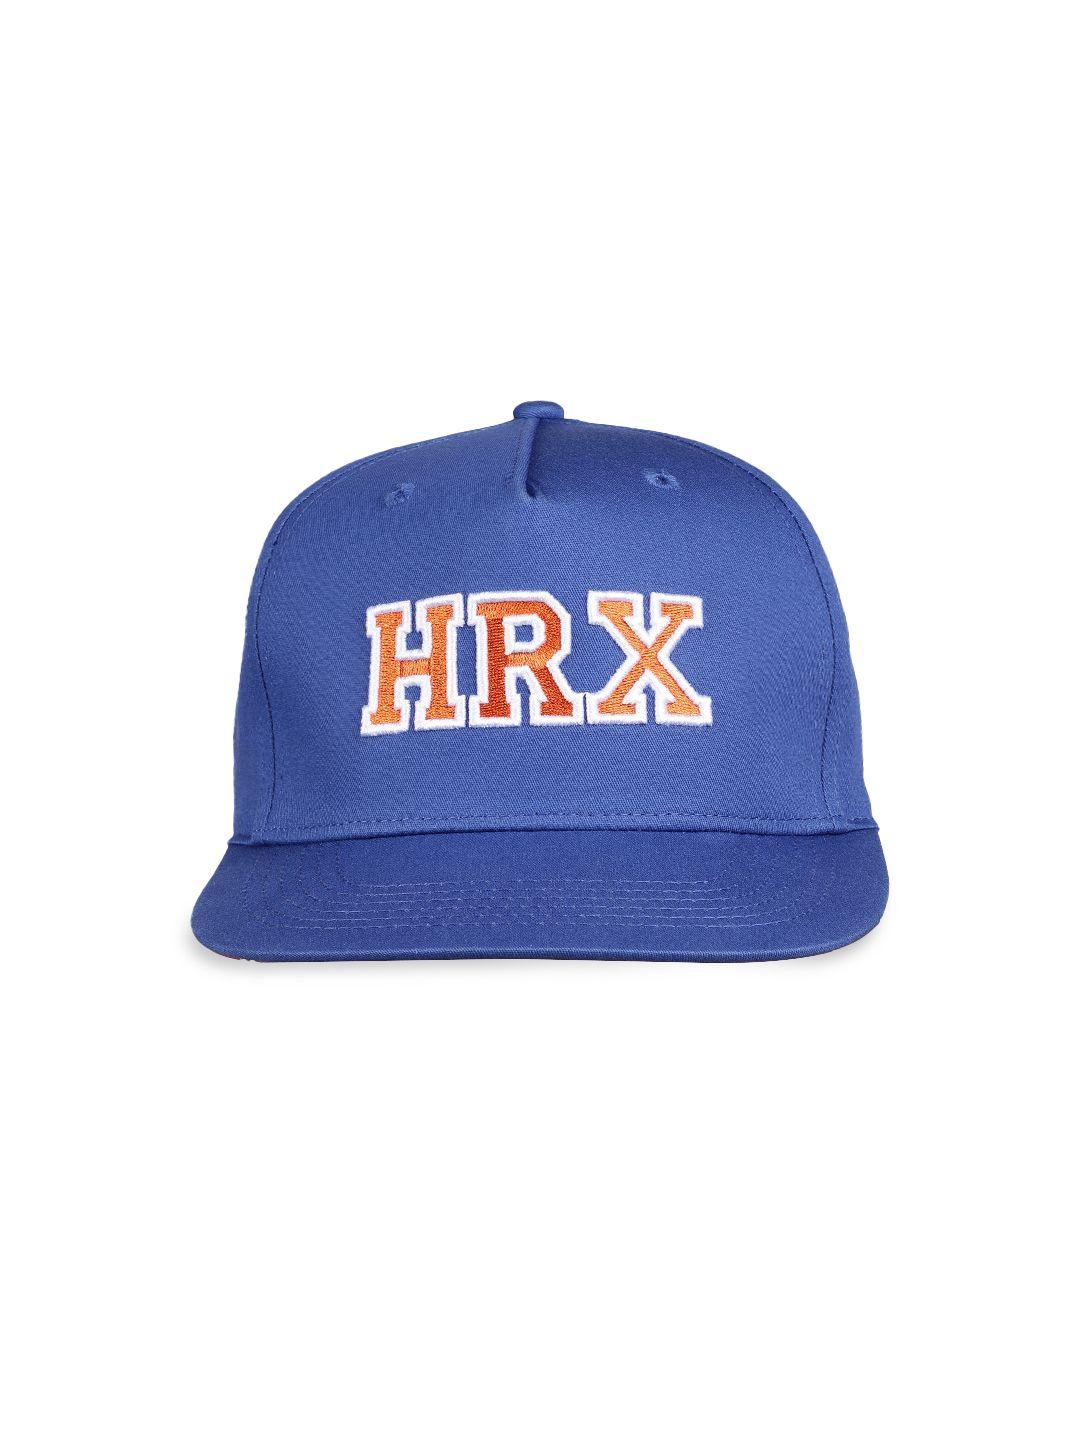 hrx by hrithik roshan unisex blue embroidered snapback cap